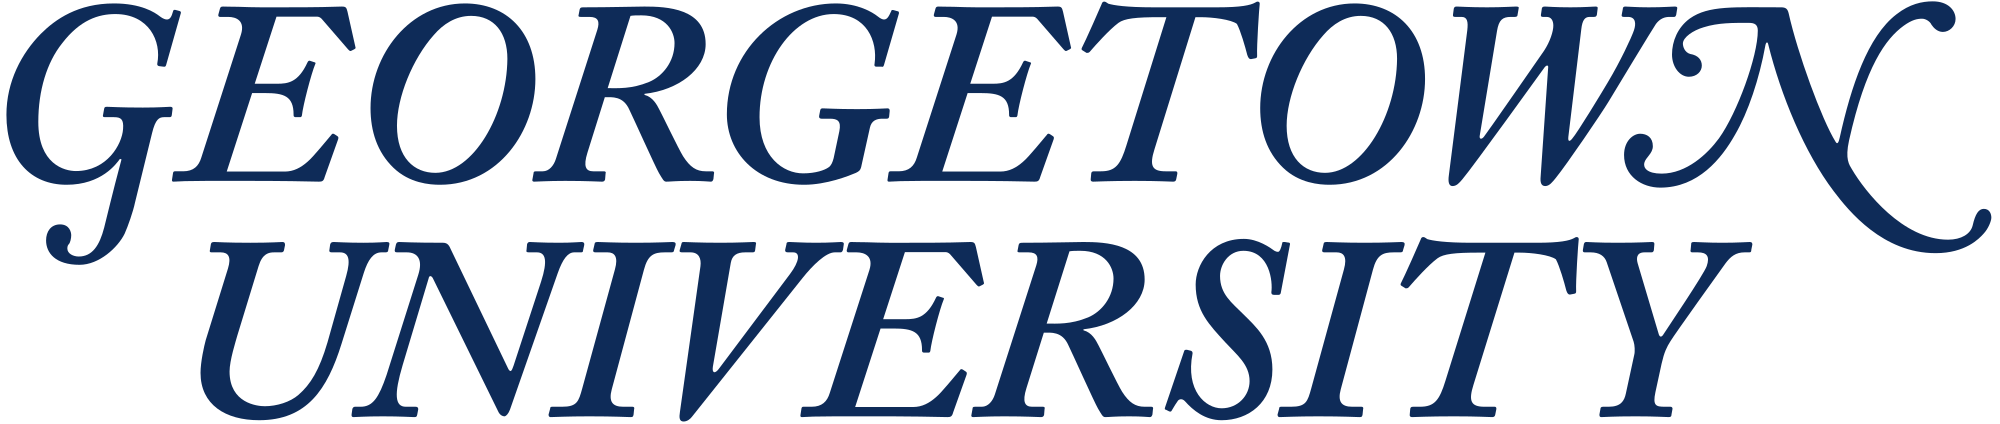 Georgetown_University_Logotype.svg